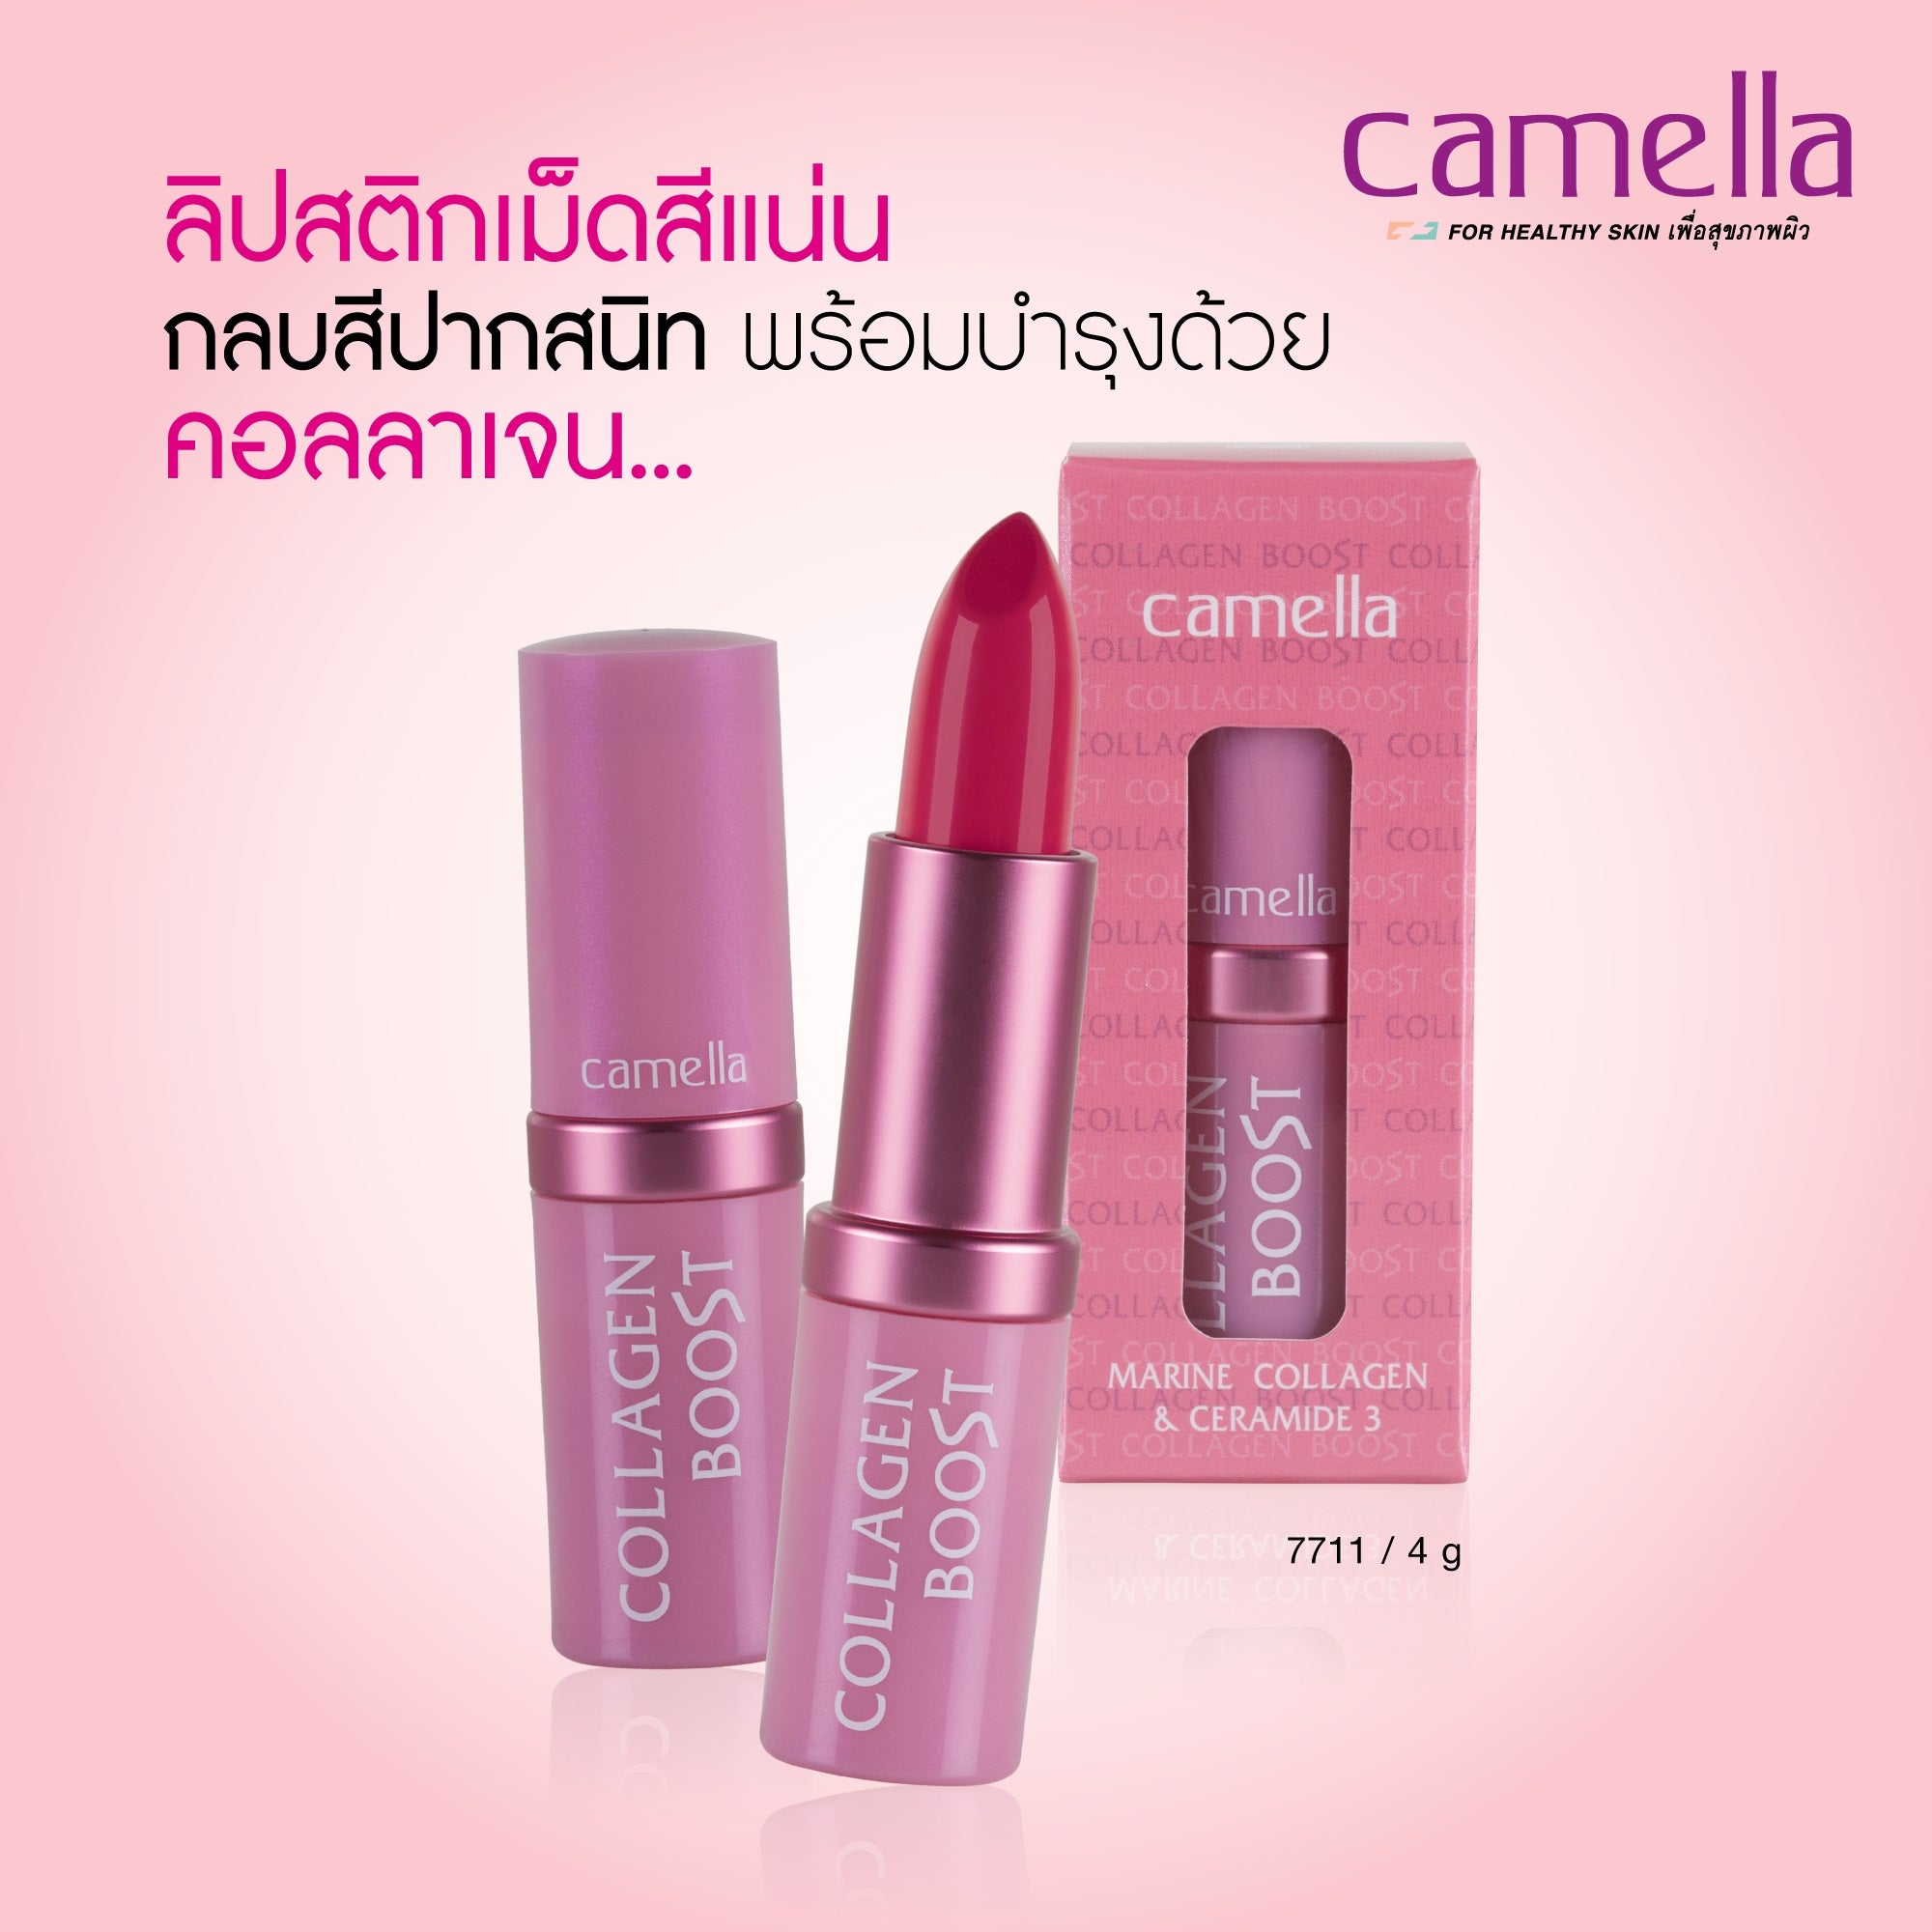 Camella Collagen Boost Lipstick #7711 : คาเมลล่า คอลลาเจน บูสต์ ลิปสติก